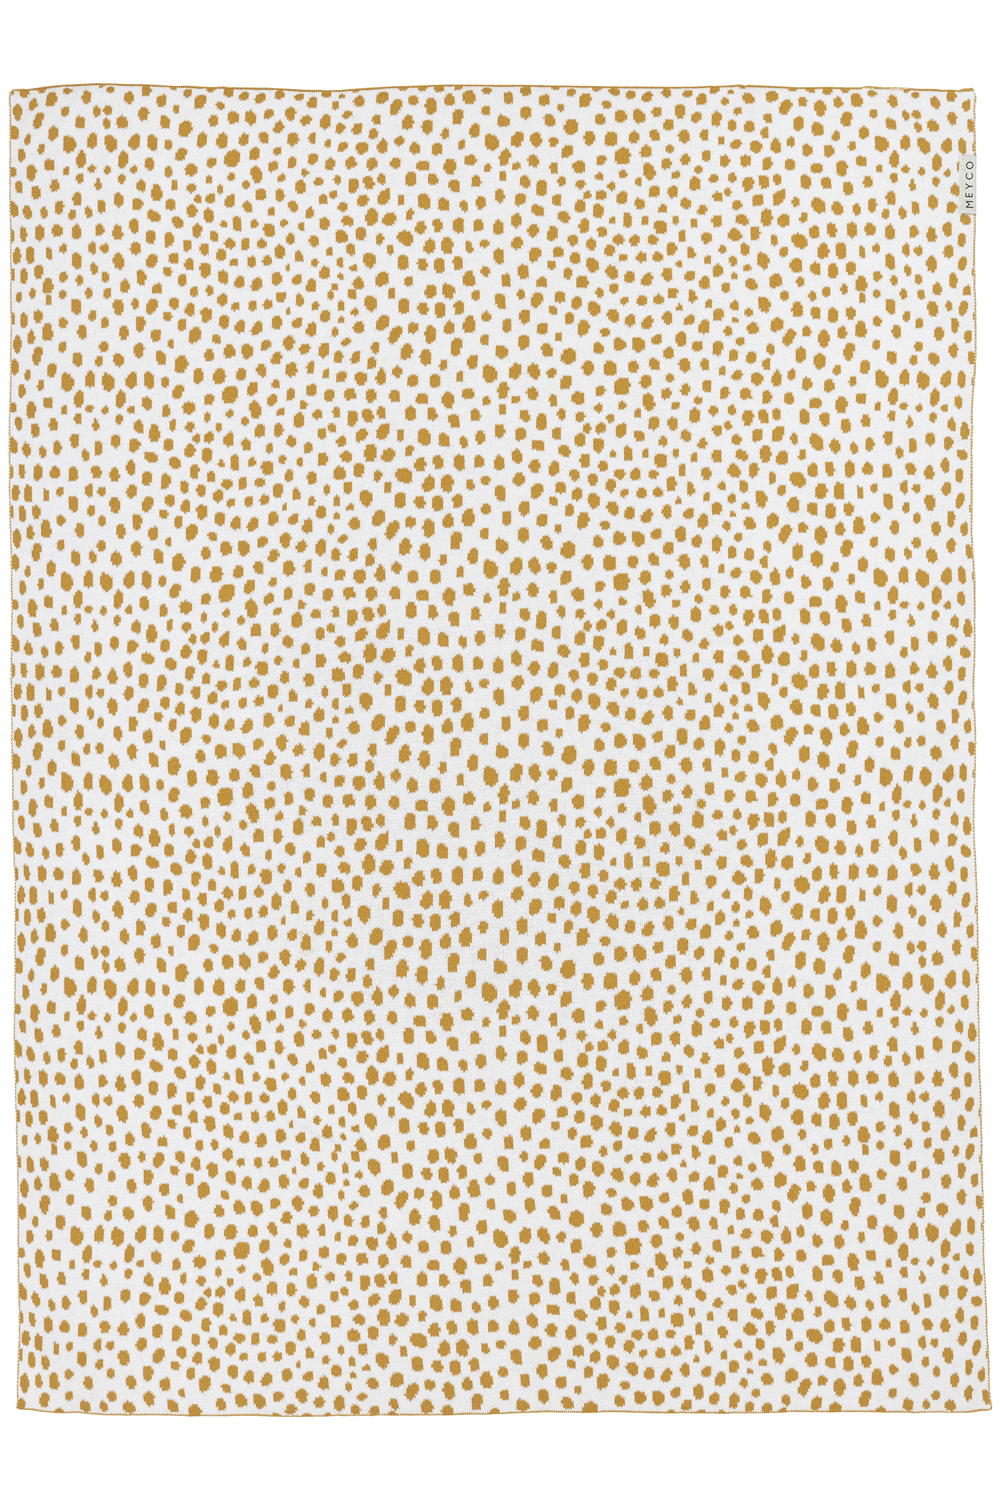 Crib bed blanket Cheetah - honey gold - 75x100cm